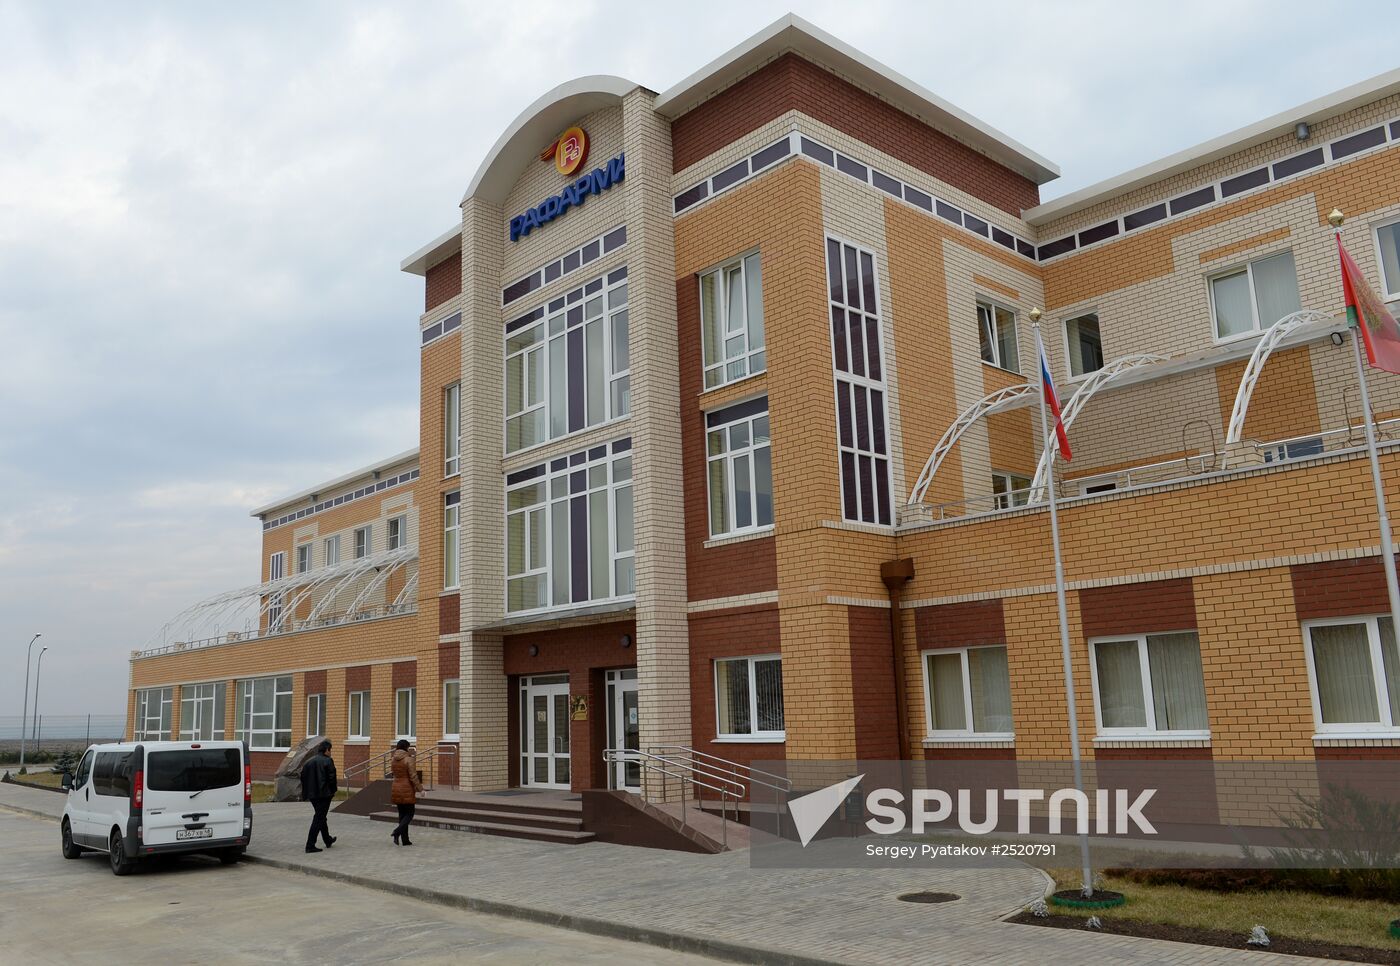 Rafarma pharmaceutical company in Lipetsk Region